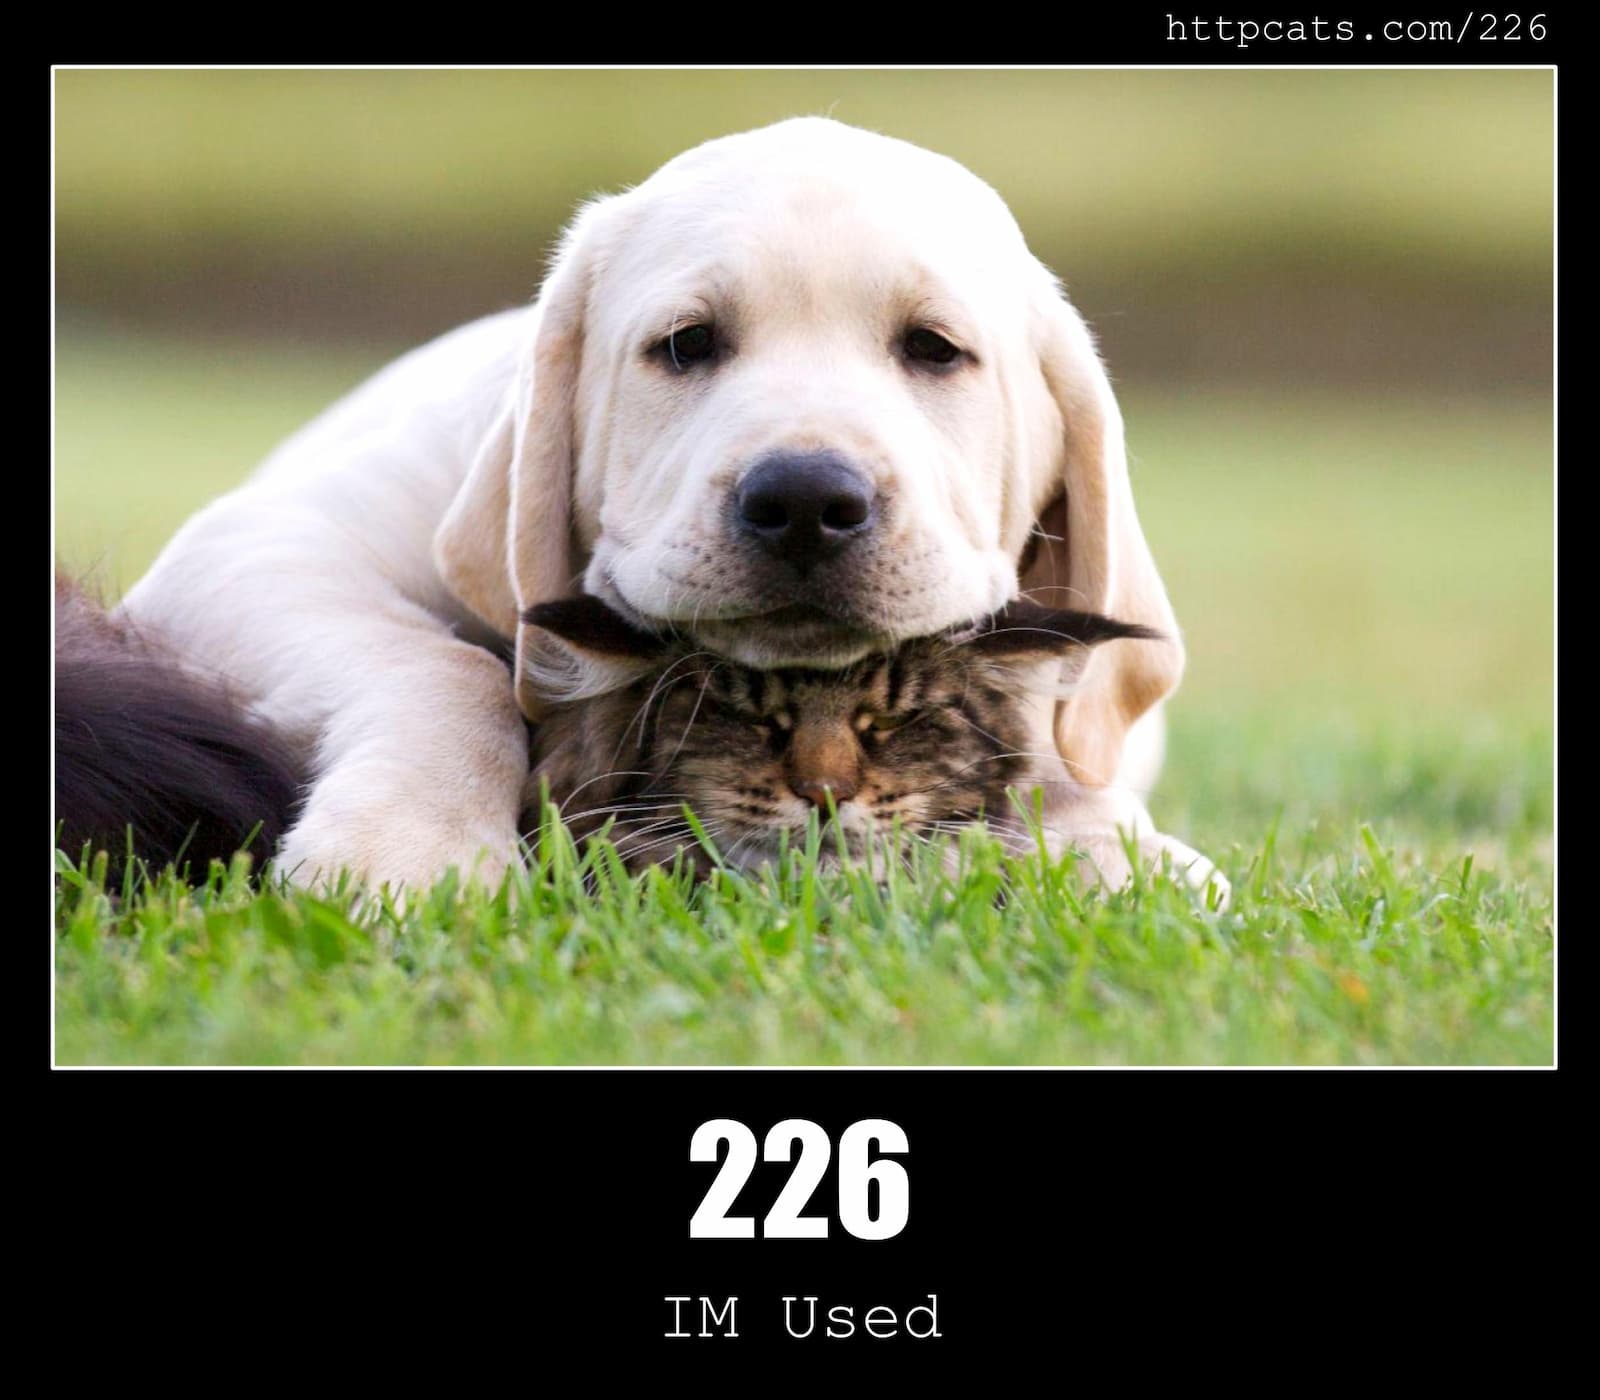 HTTP Status Code 226 IM Used & Cats